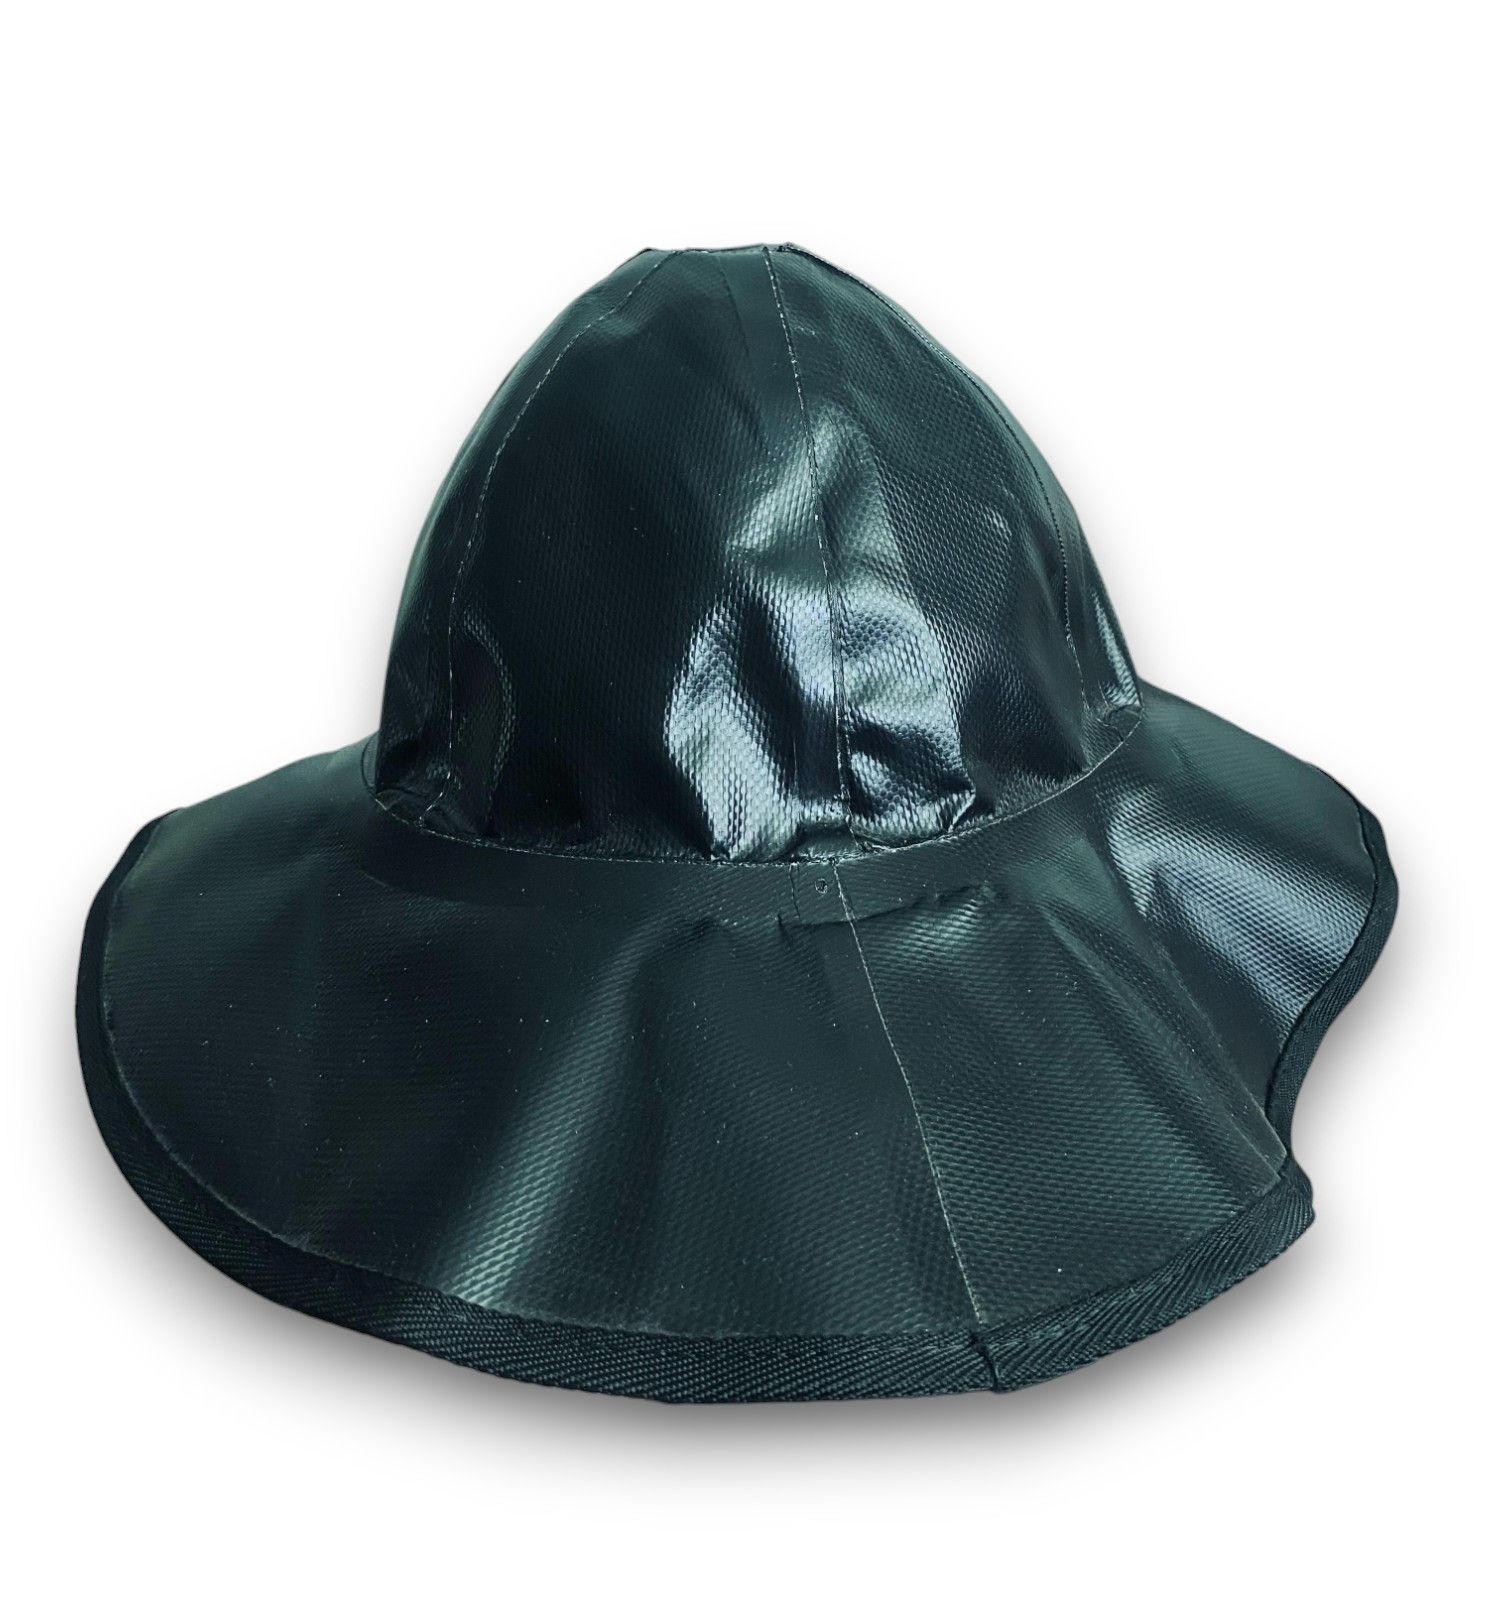 Outdoor Life - Ortlieb Boonie Hat Waterproof Rare Black Gorcope Goretex - 5